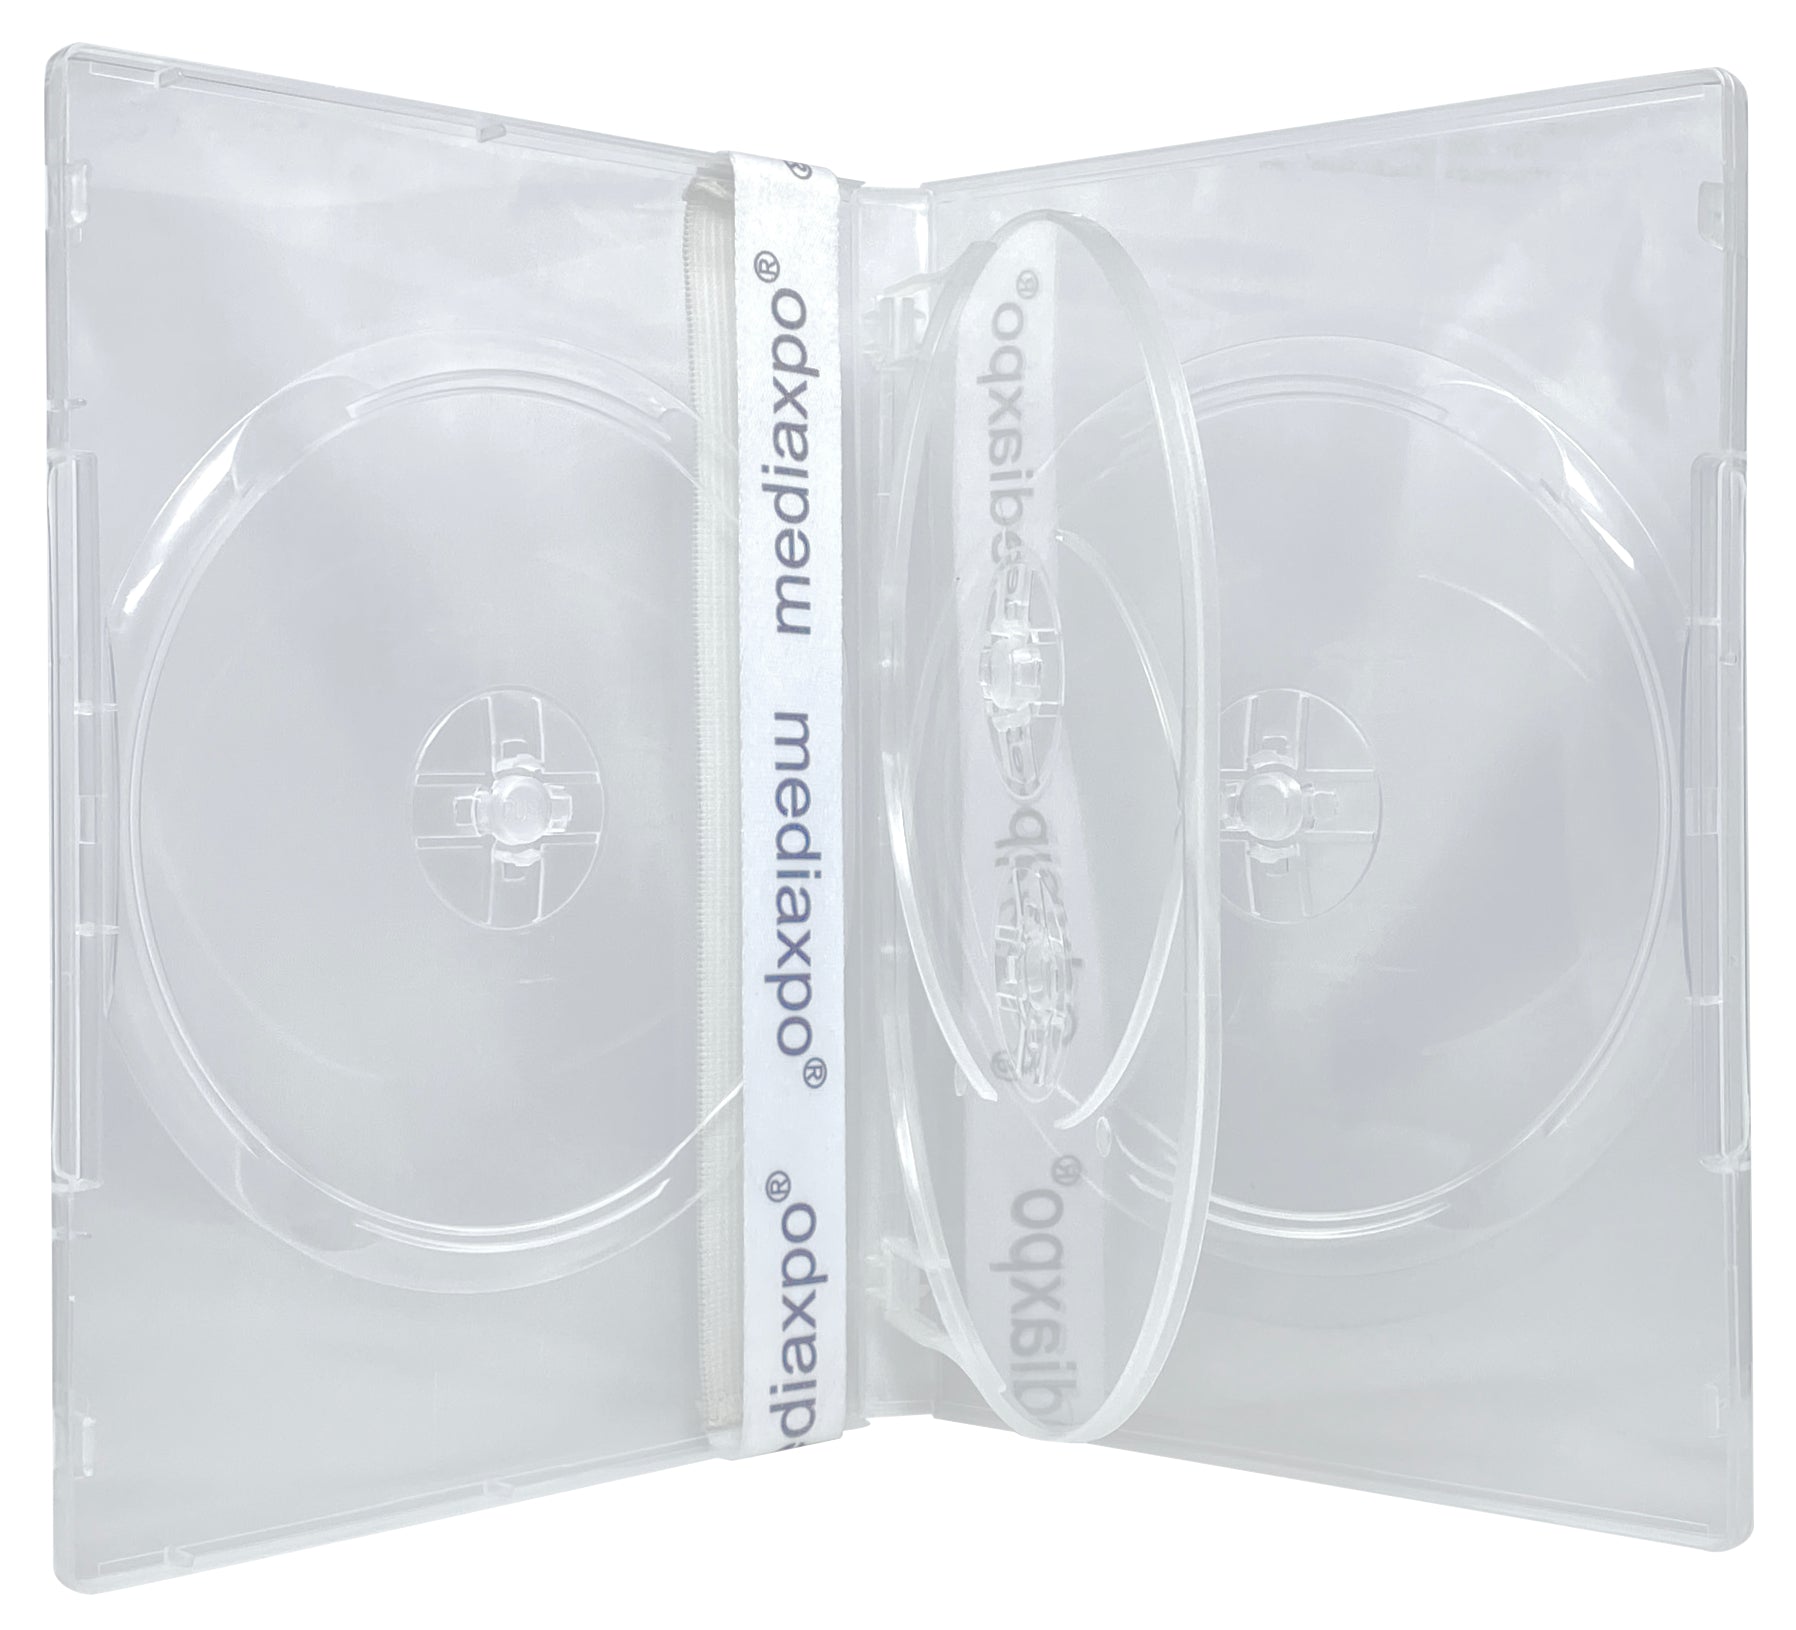  CheckOutStore (10) Premium Standard Single 1-Disc DVD